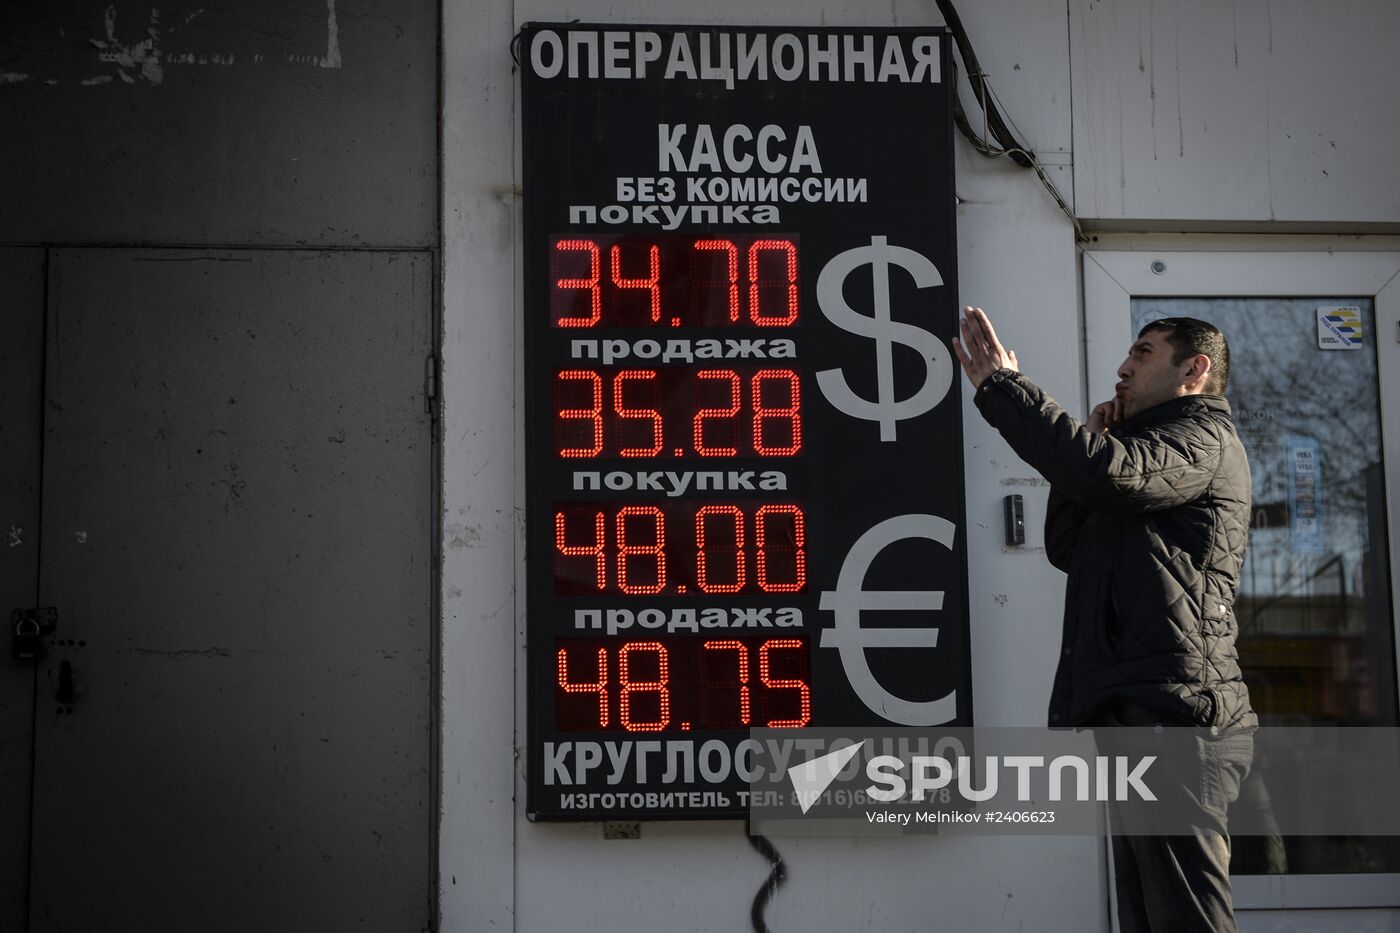 Dollar rate drops below 35 roubles